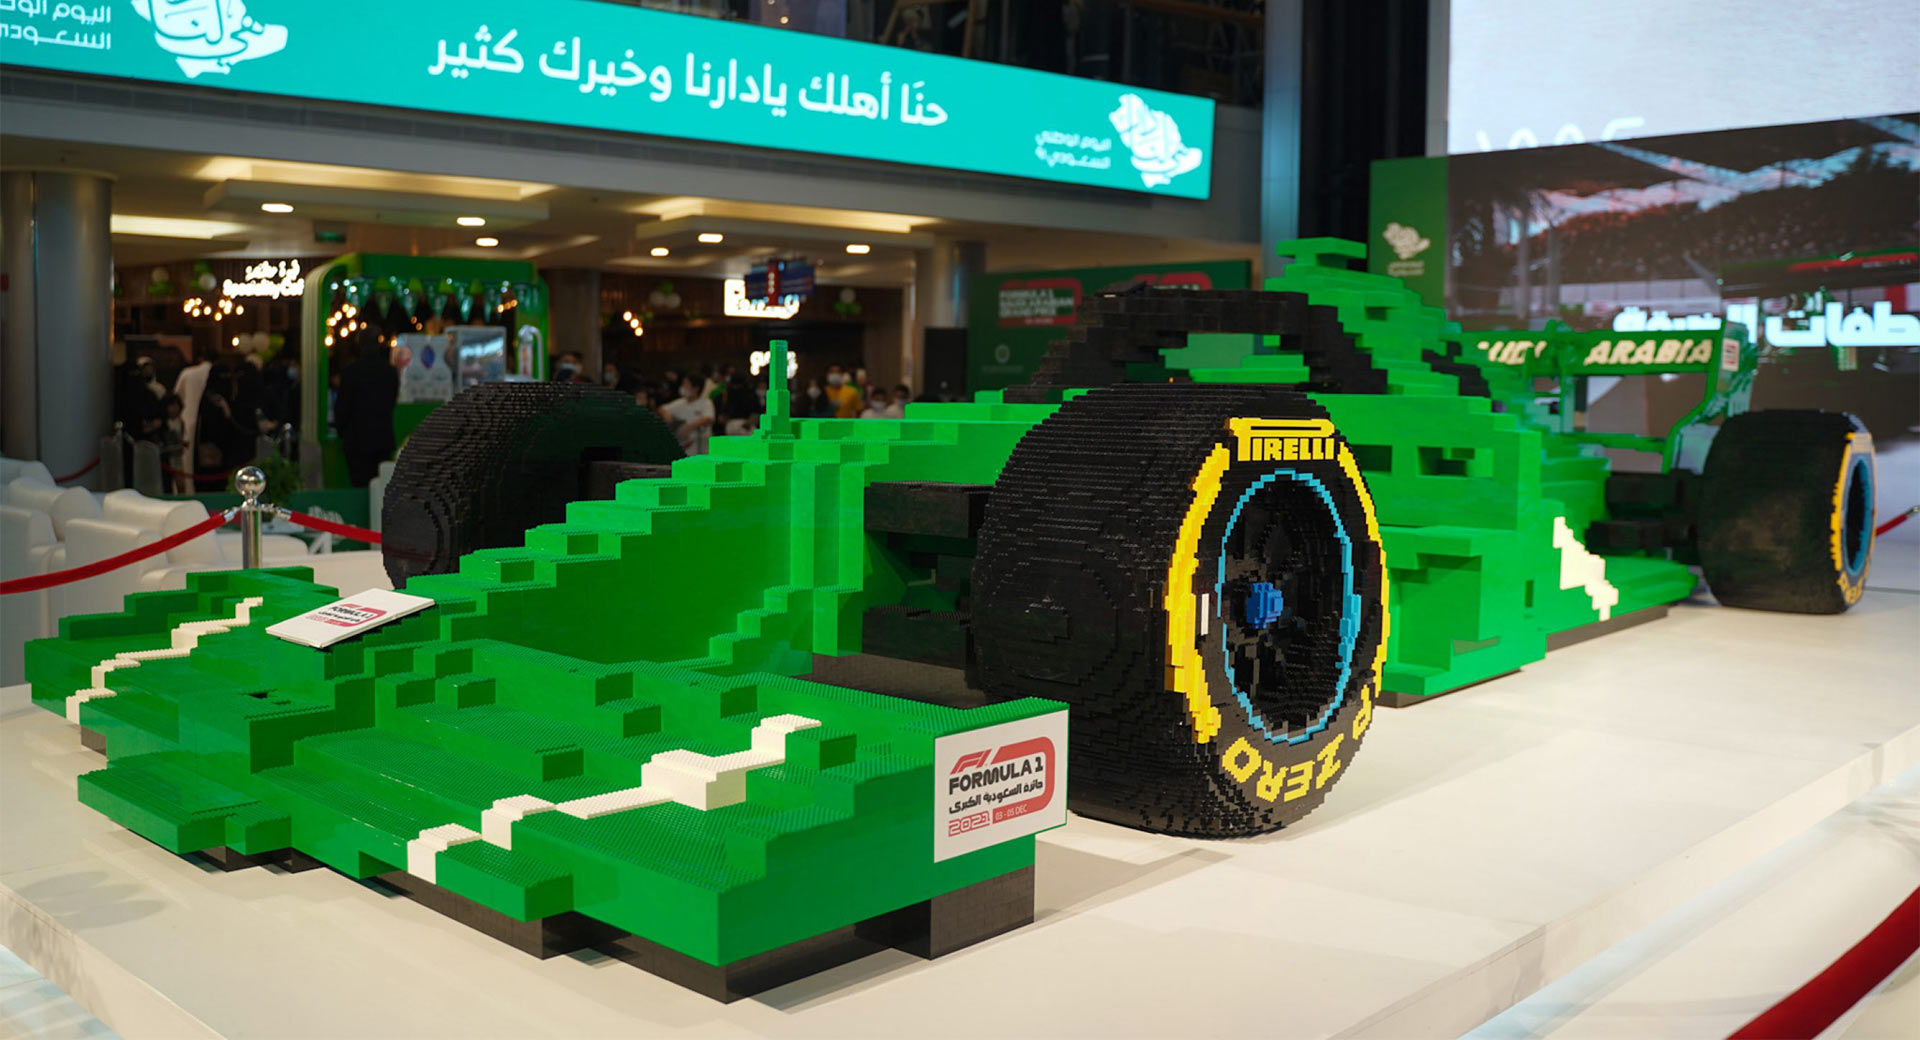 Watch The World's Largest Lego Formula 1 Car Get Built Before Saudi Arabian  Grand Prix